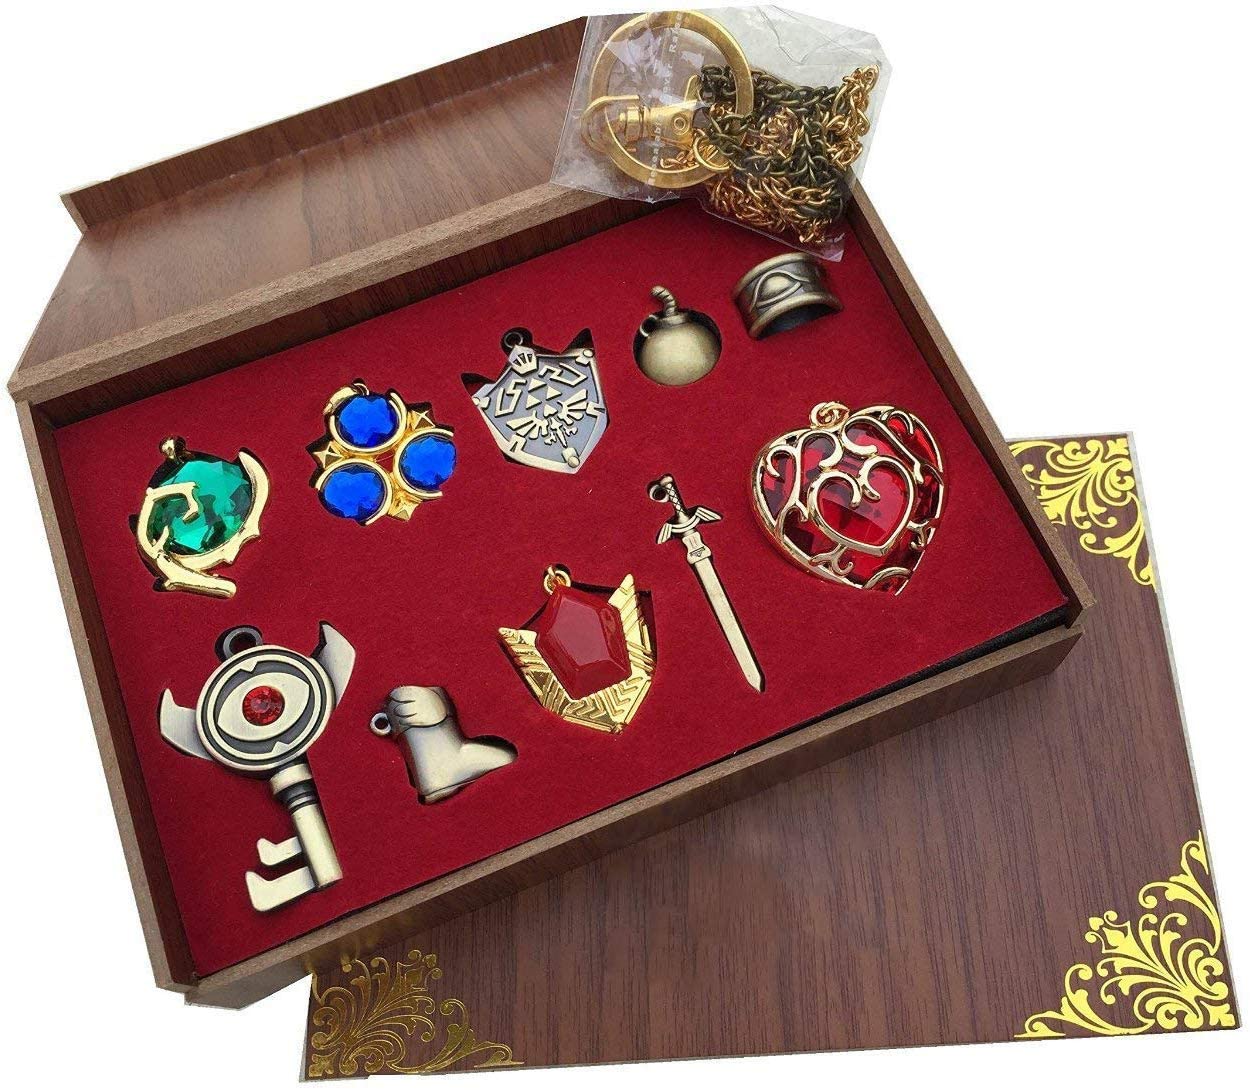 The Legend of Zelda wooden box 10 set Keychain مجموعة ميداليات أسطورة زيلدا.